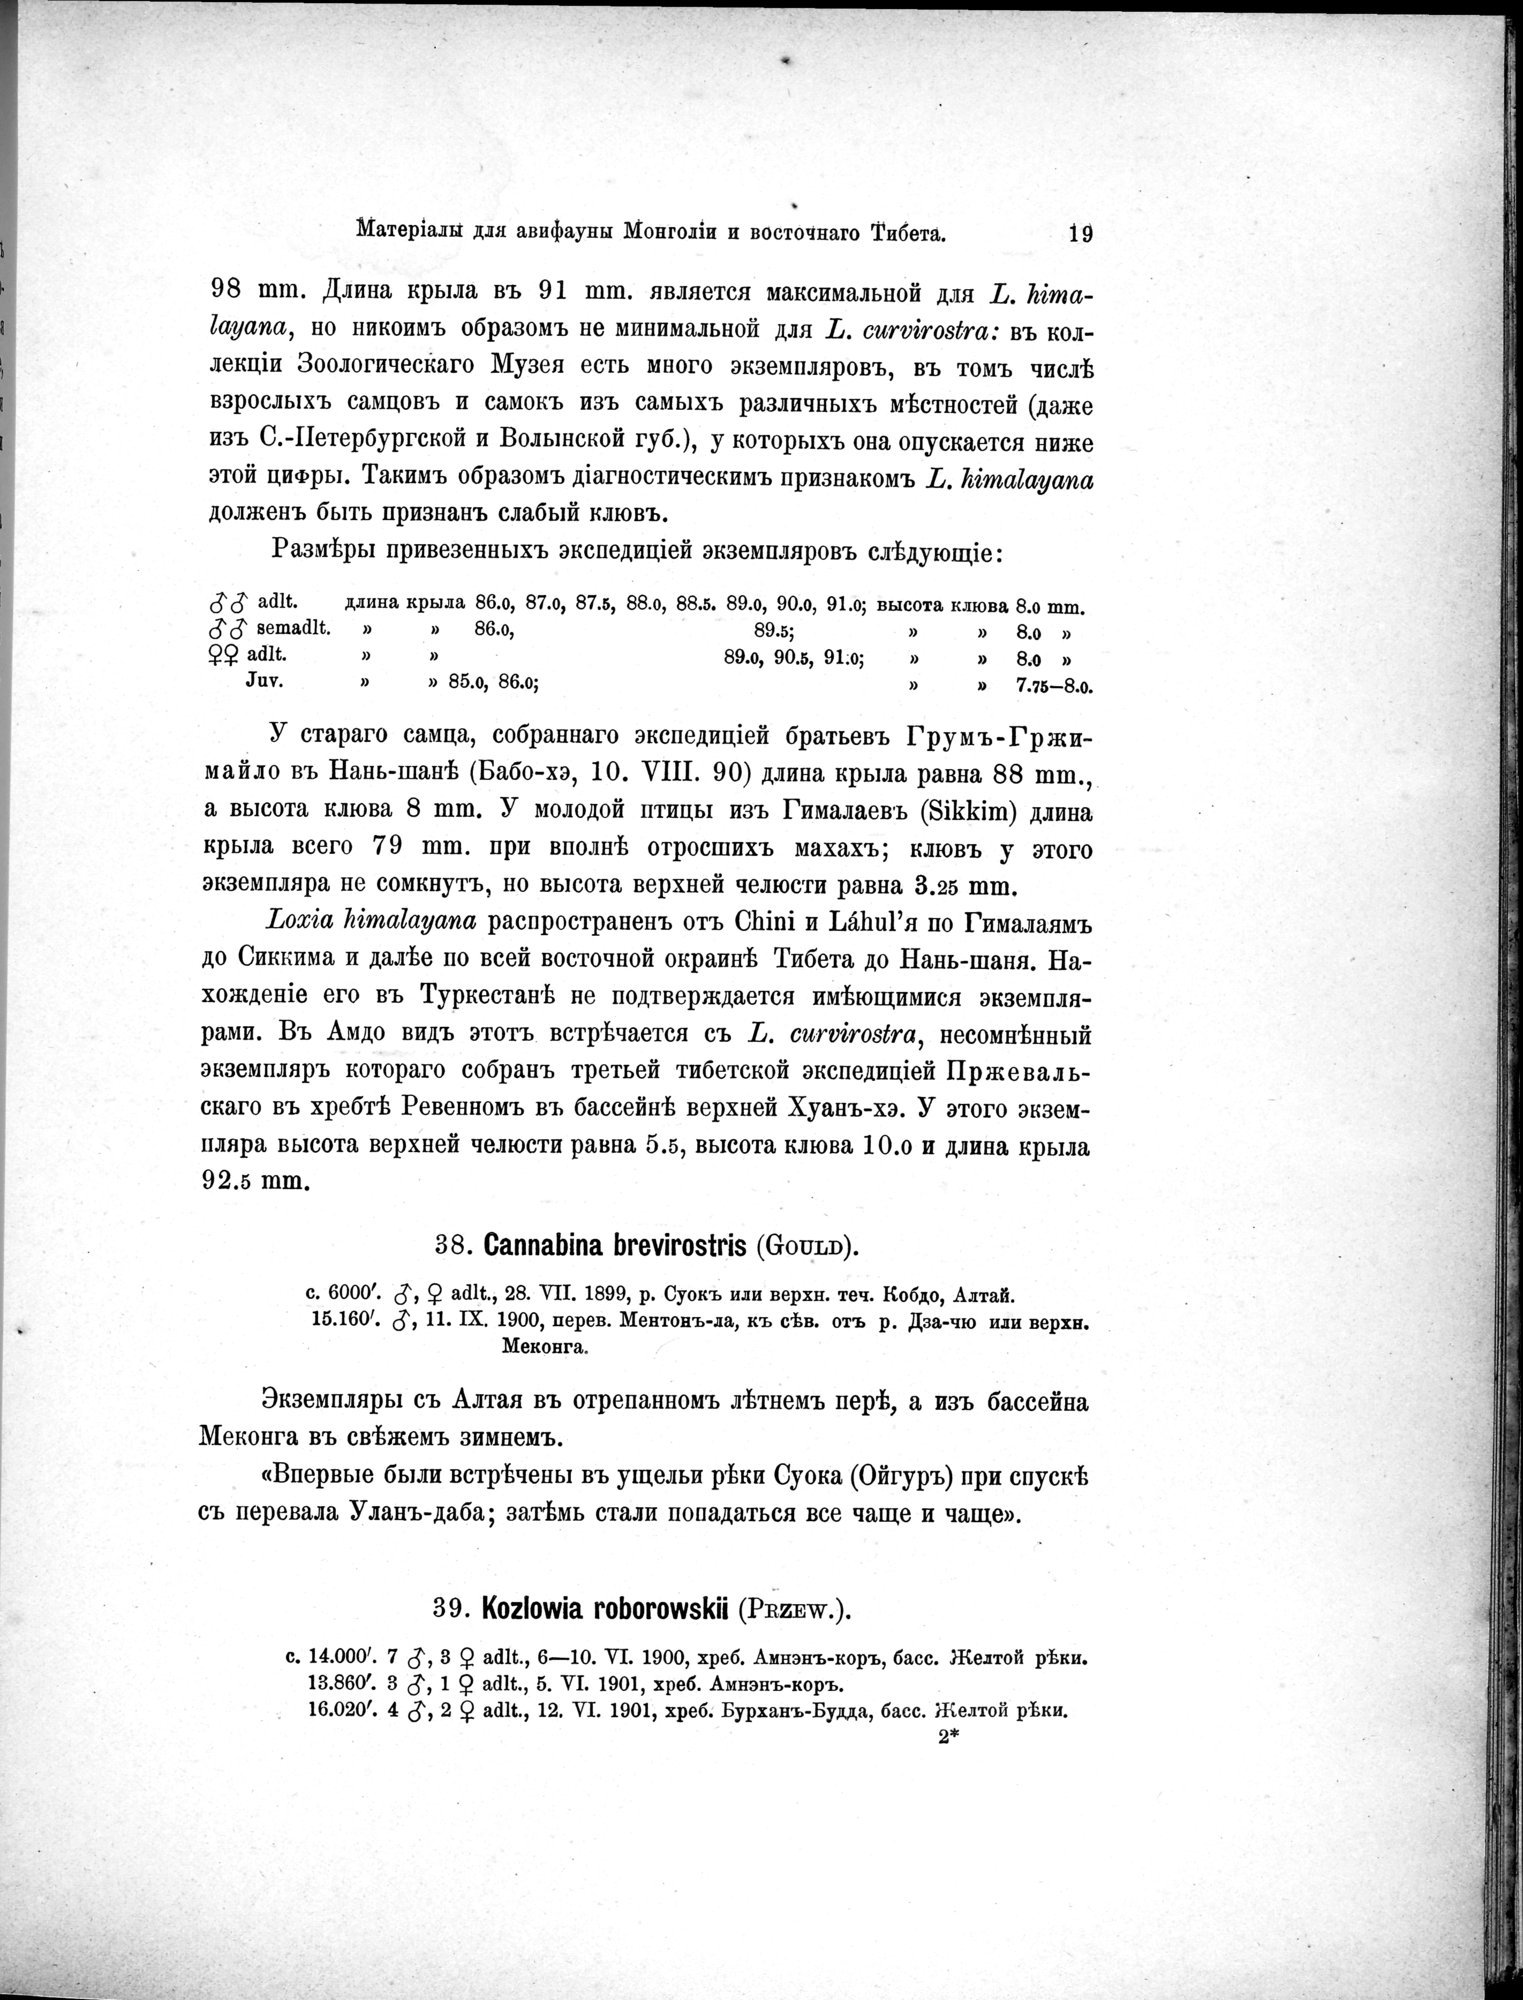 Mongoliia i Kam : vol.5 / Page 91 (Grayscale High Resolution Image)